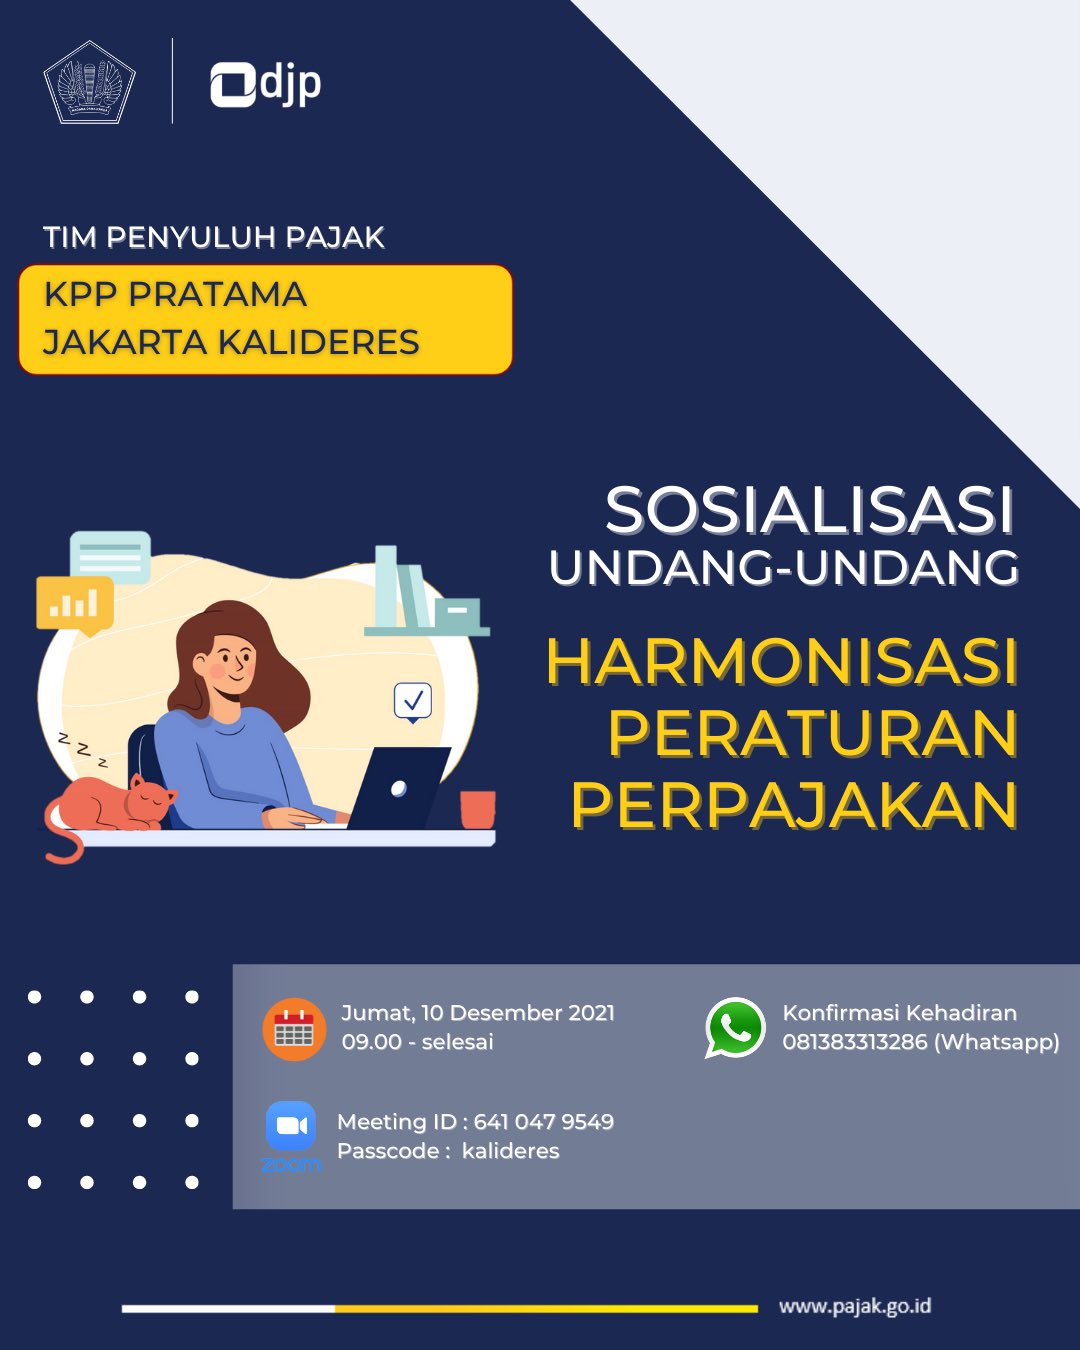 KPP PRATAMA JAKARTA KALIDERES on X: Halo #KawanPajak ! Mari ikuti  Sosialisasi Undang-Undang Harmonisasi Perpajakan dari Tim Penyuluh KPP  Pratama Jakarta Kalideres, yang akan diselenggarakan secara virtual melalui  aplikasi Zoom Meeting pada